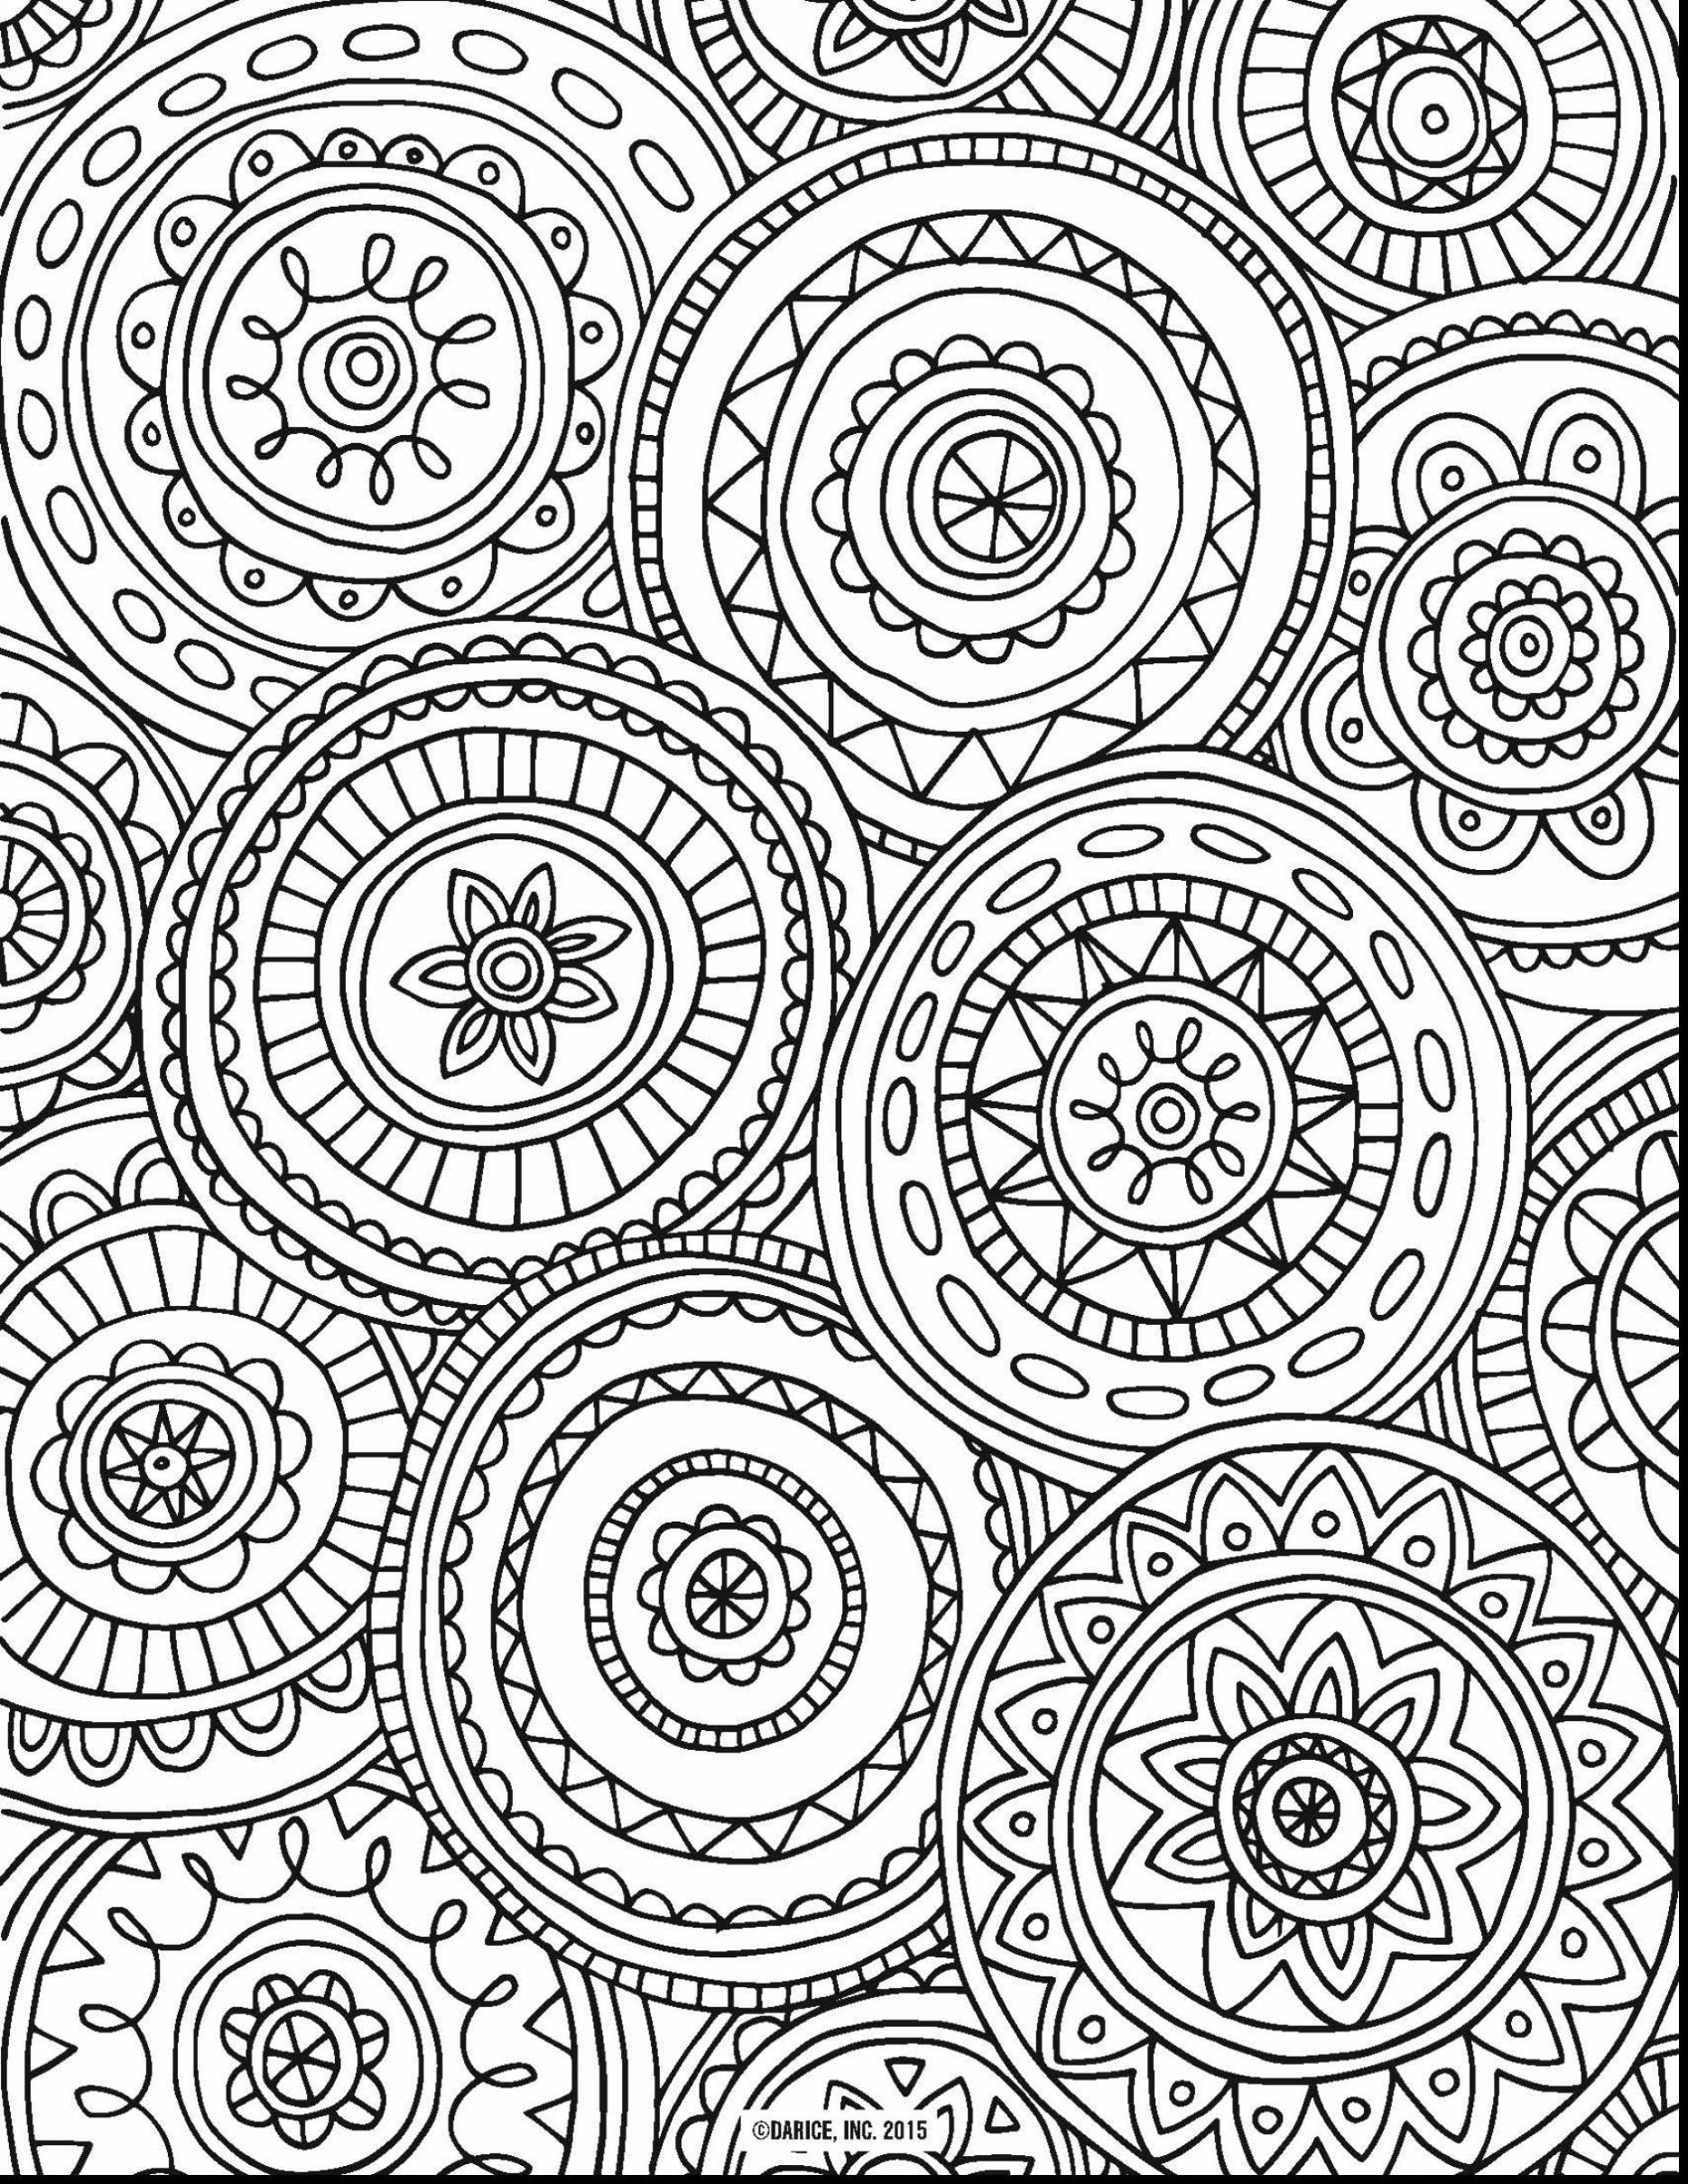 Best Of Free Printable Mandala Coloring Pages For Adults Pdf - Free Printable Coloring Pages For Adults Pdf